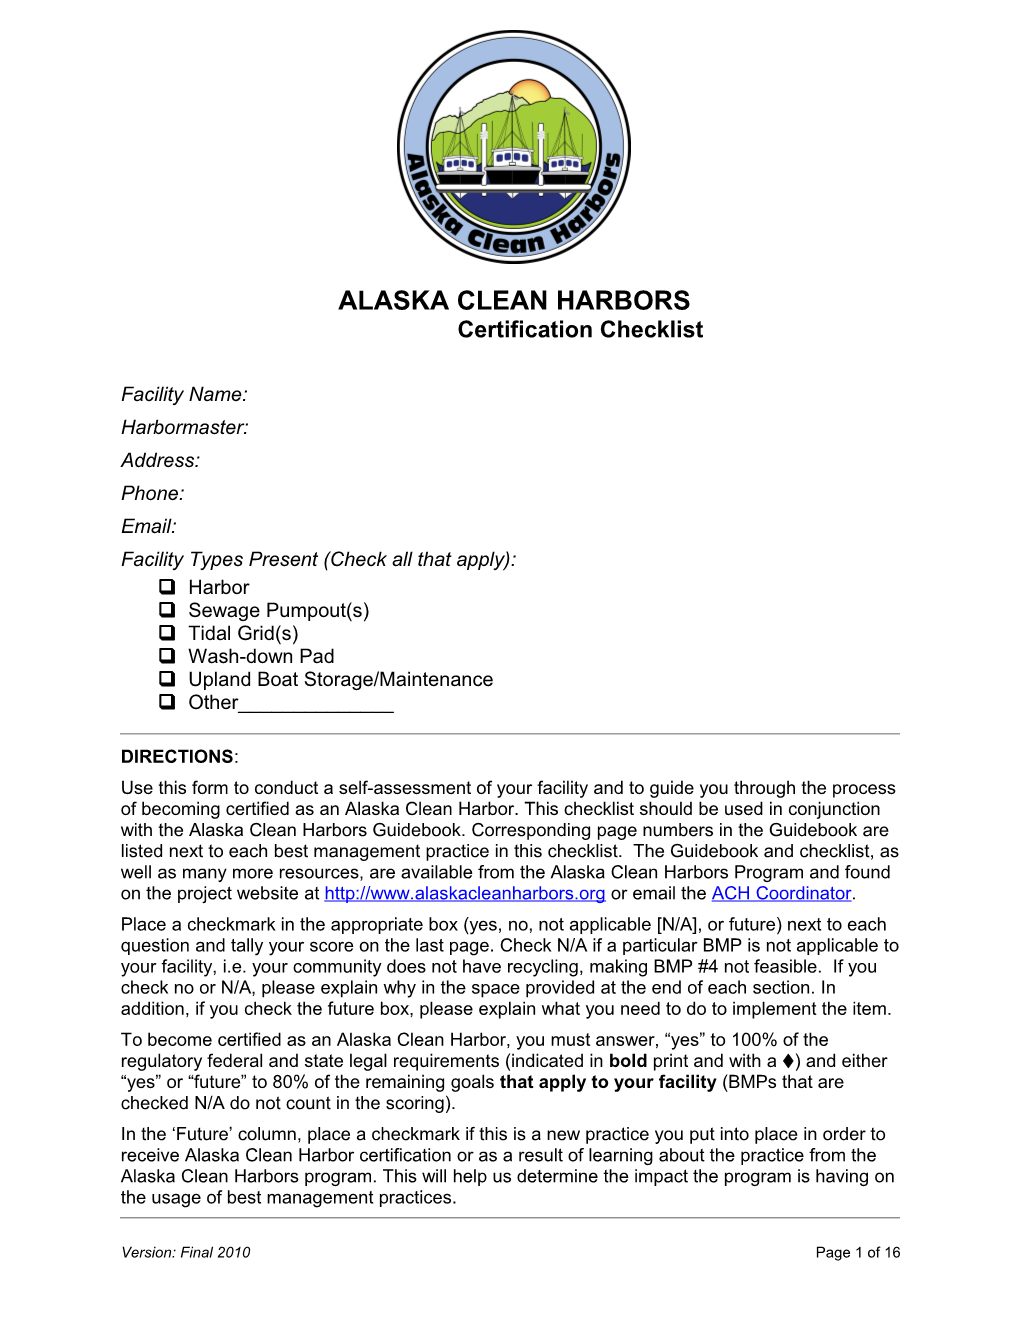 Alaska Clean Harbors Award Checklist